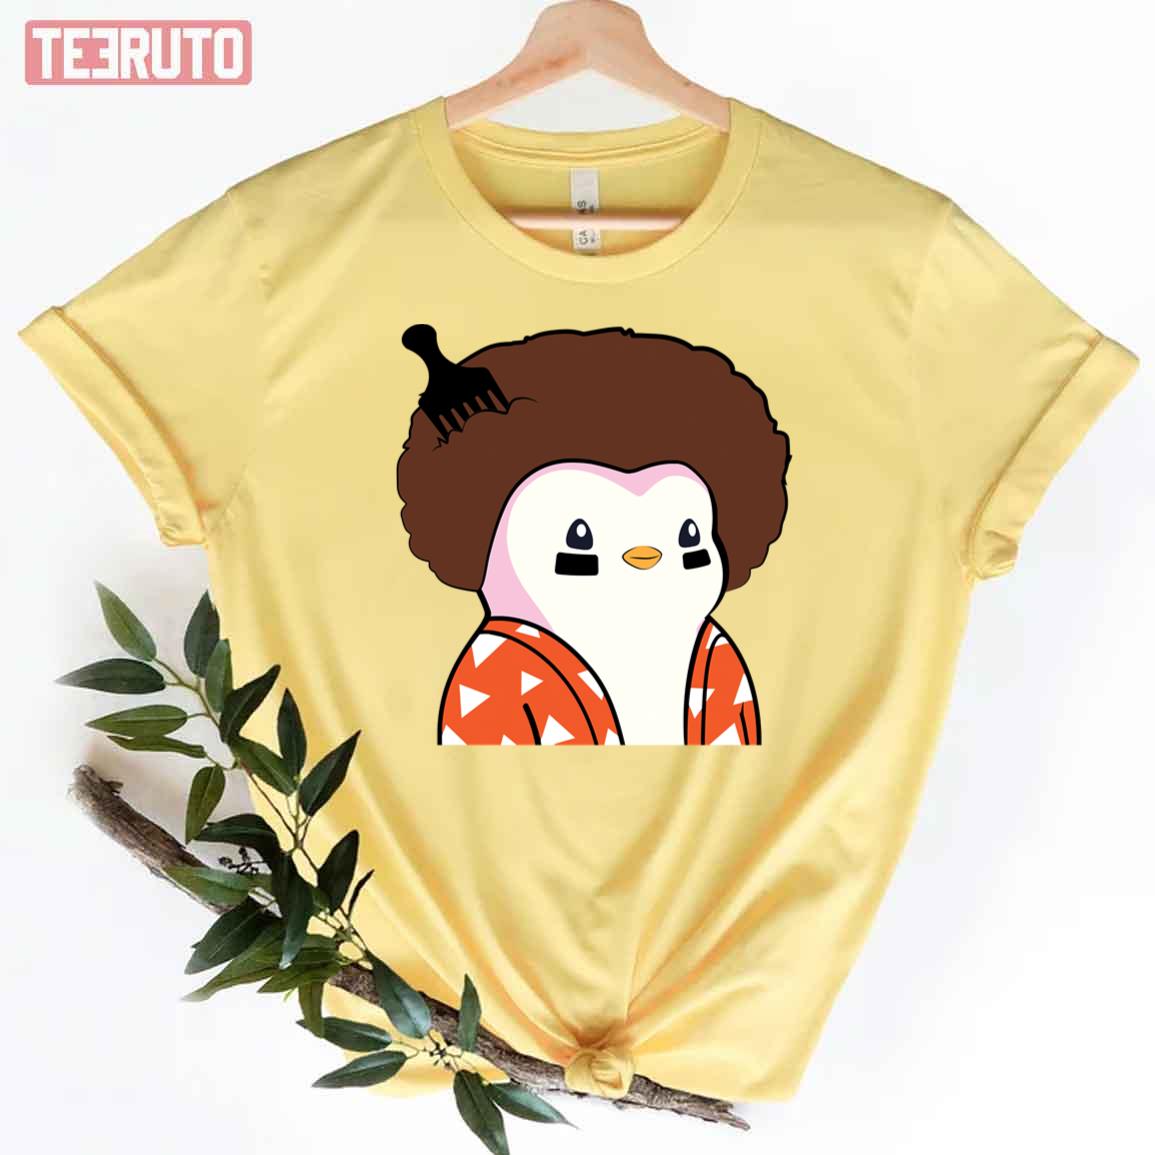 Cartoon Pudgy Penguin 4499 NFT Cute Avatar Unisex T-Shirt